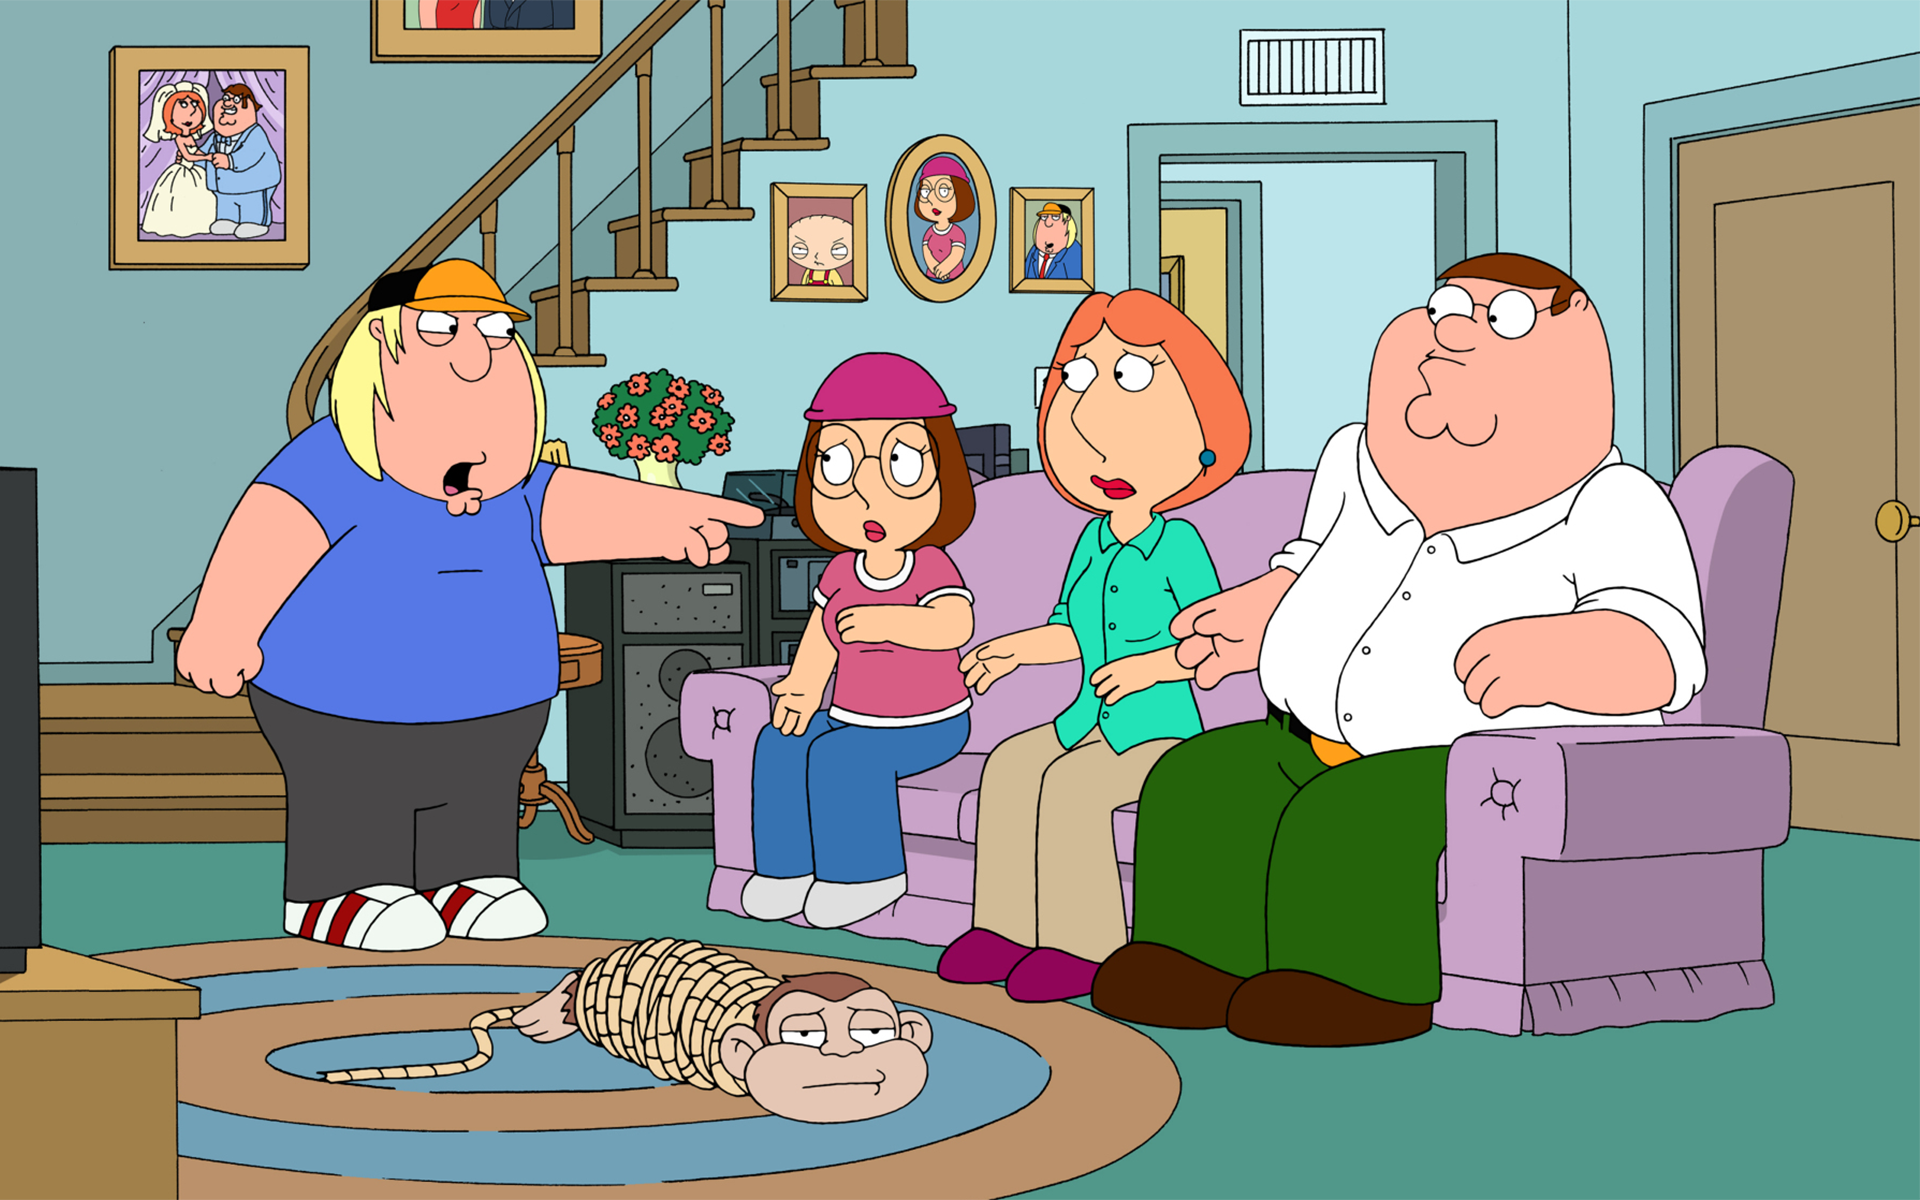 Family Guy HD Wallpaper